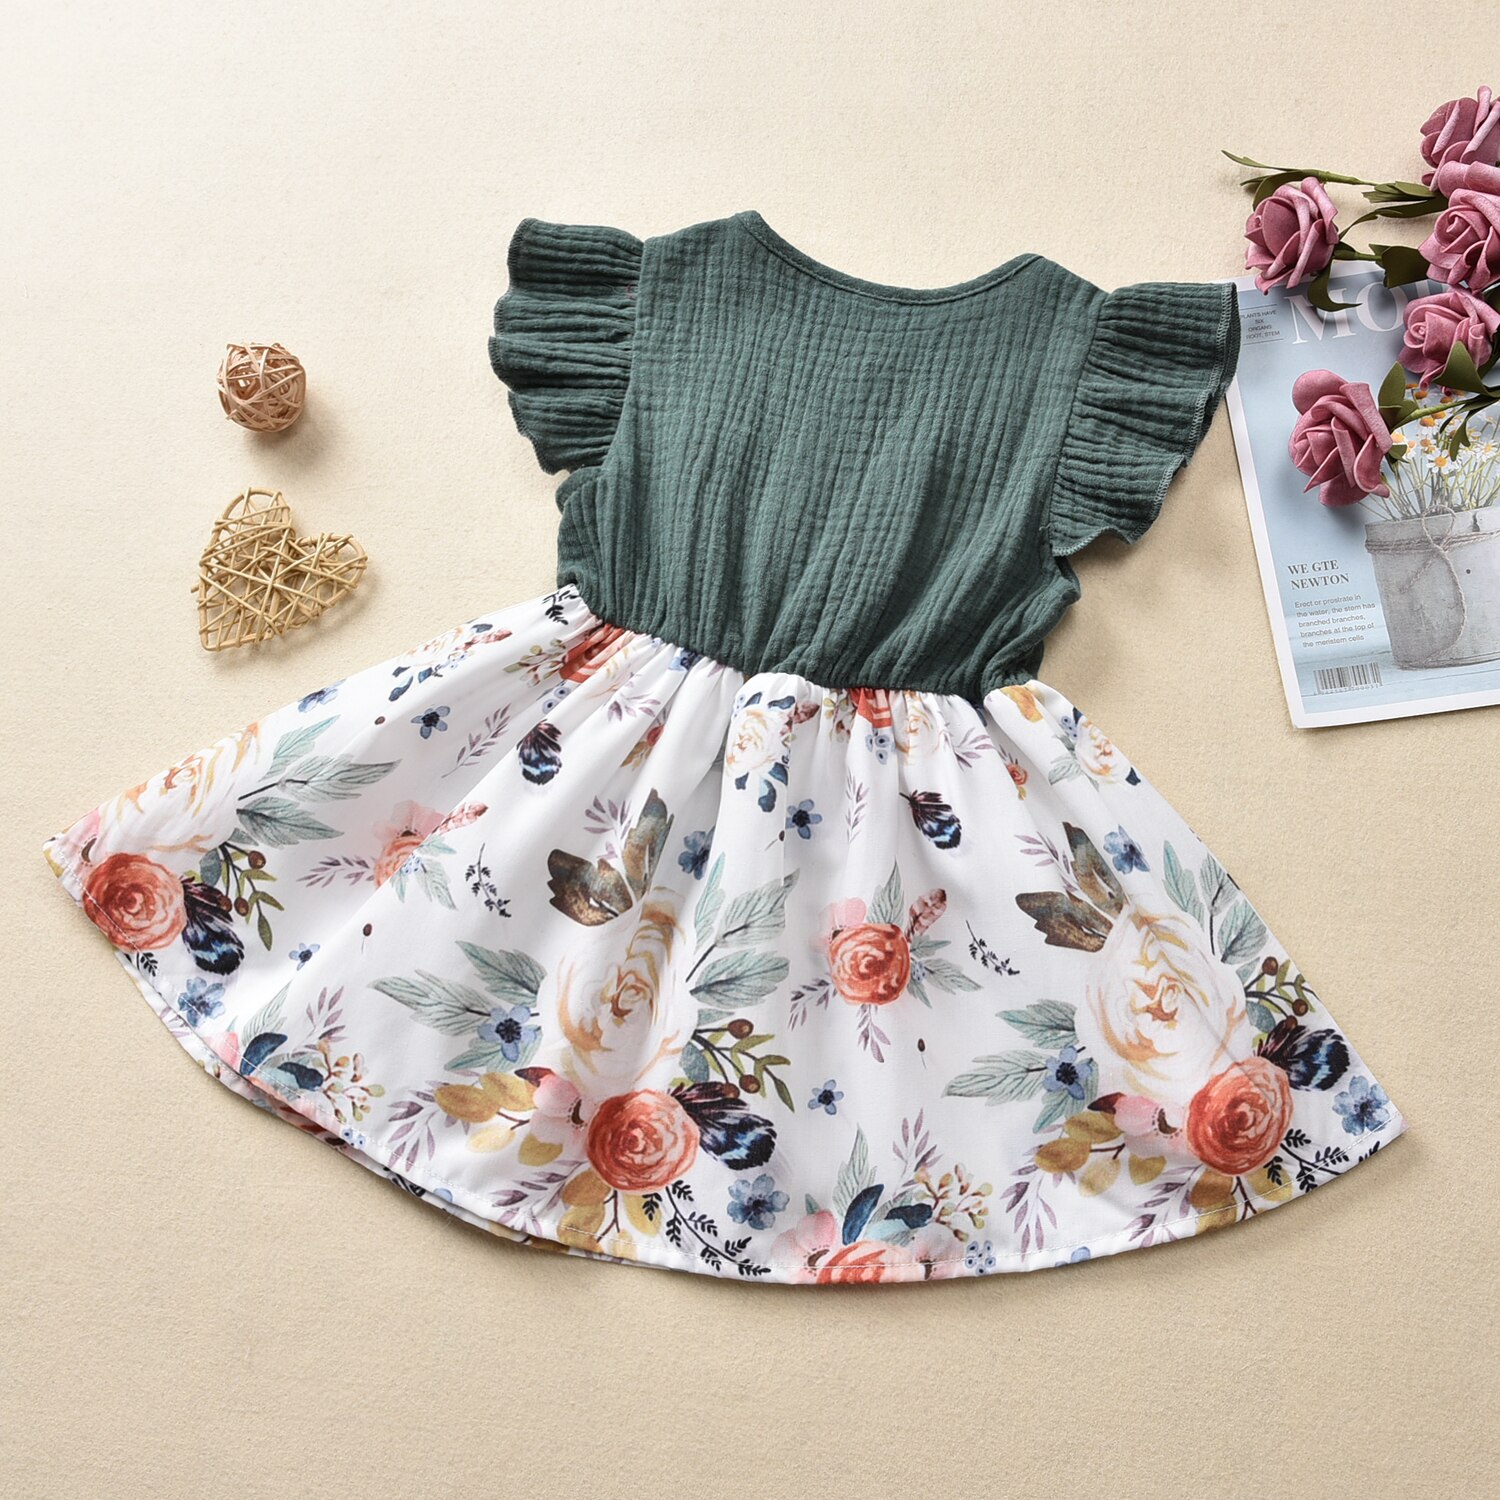 Toddler baby pige prinsesse kjole vintage blomstermotiver blonder halter fest kjoler sommer tøj